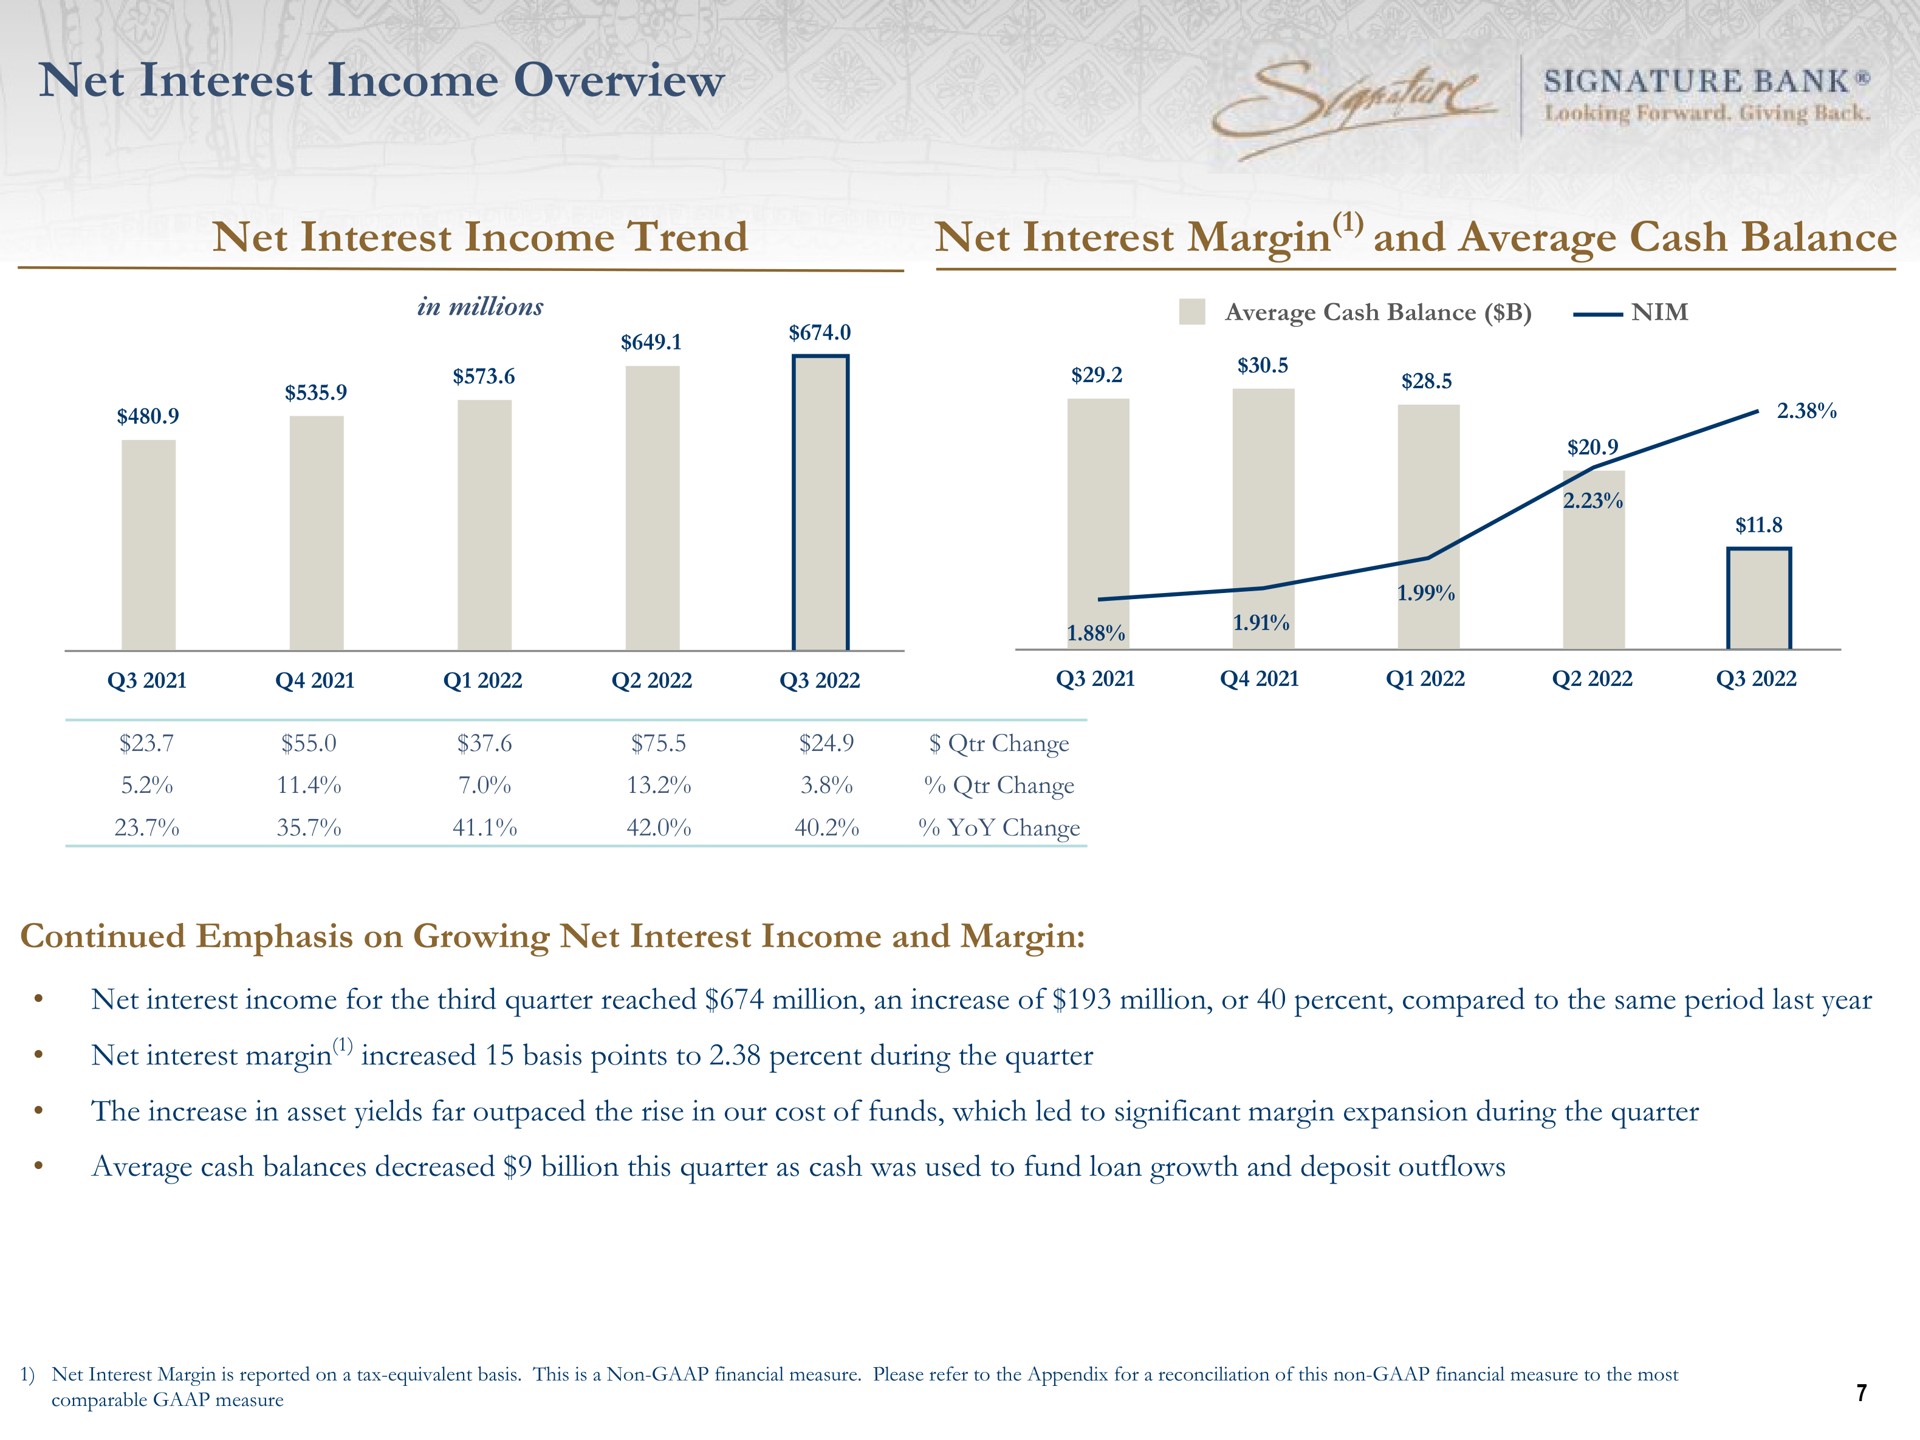 net interest income overview net interest income trend net interest margin and average cash balance signature bank a | Signature Bank